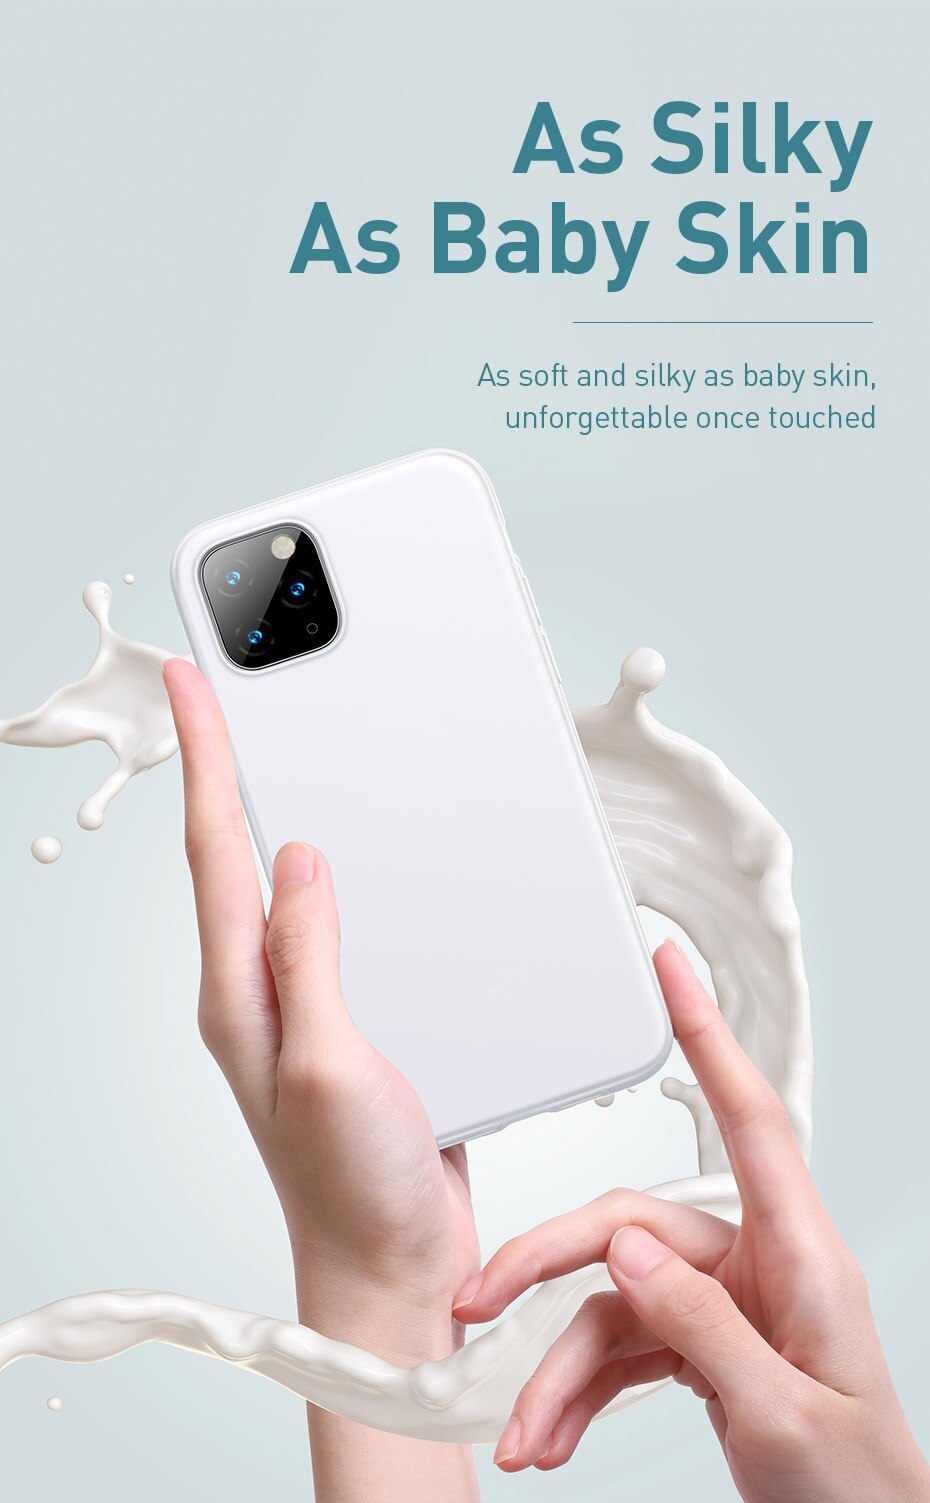 Husa Apple iPhone 11 Pro, Baseus Jelly Liquid, Rosu / Transparent, 5.8 inch